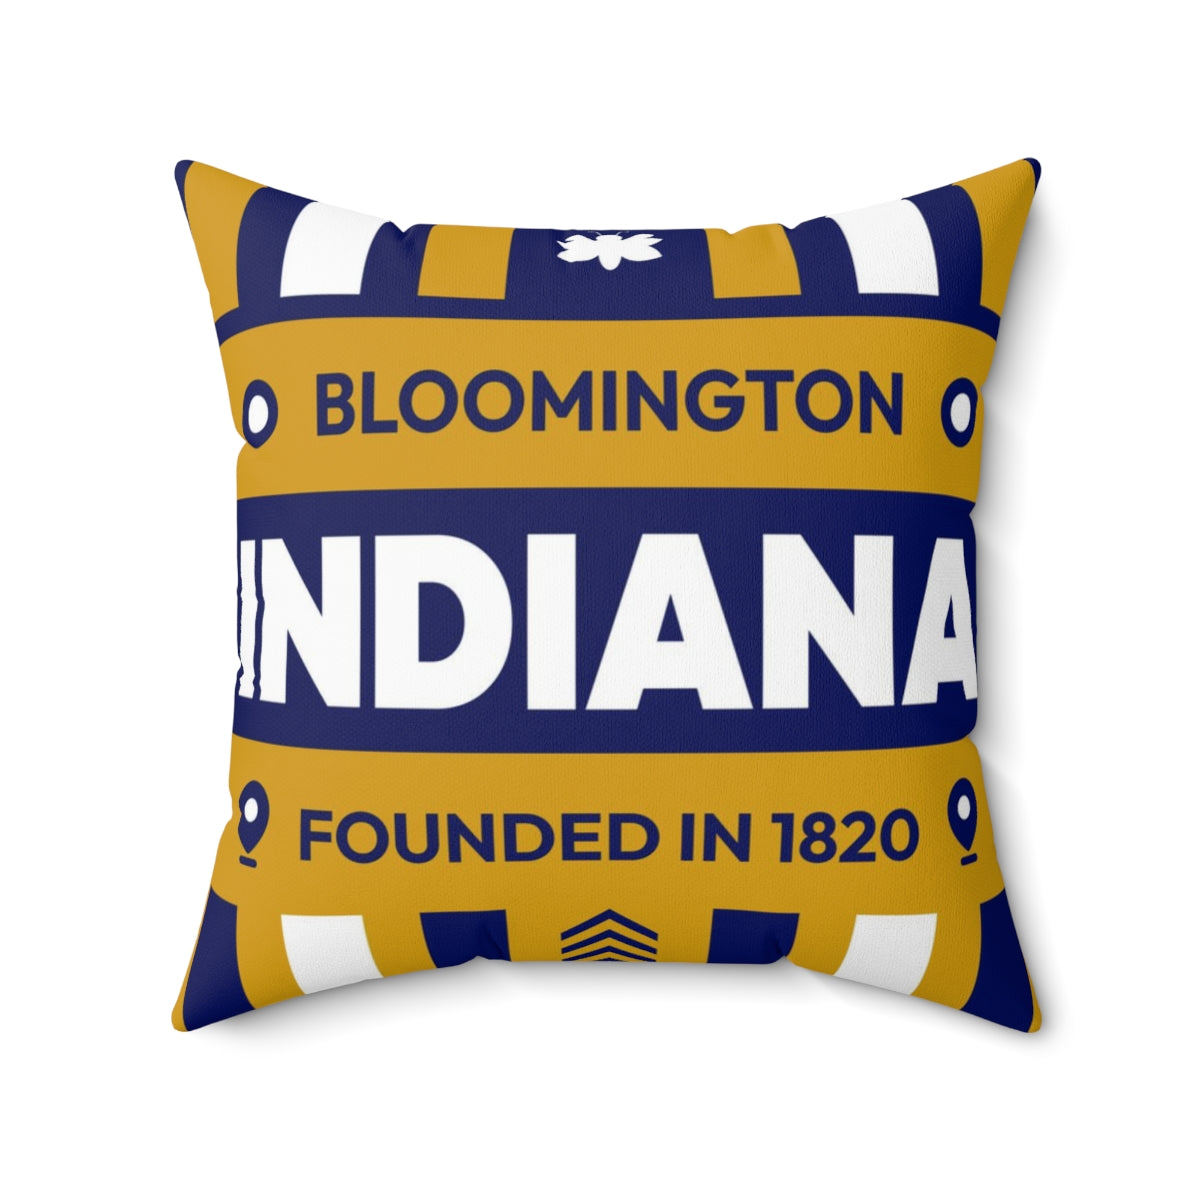 20"x20" pillow design for Bloomington, Indiana Top view.